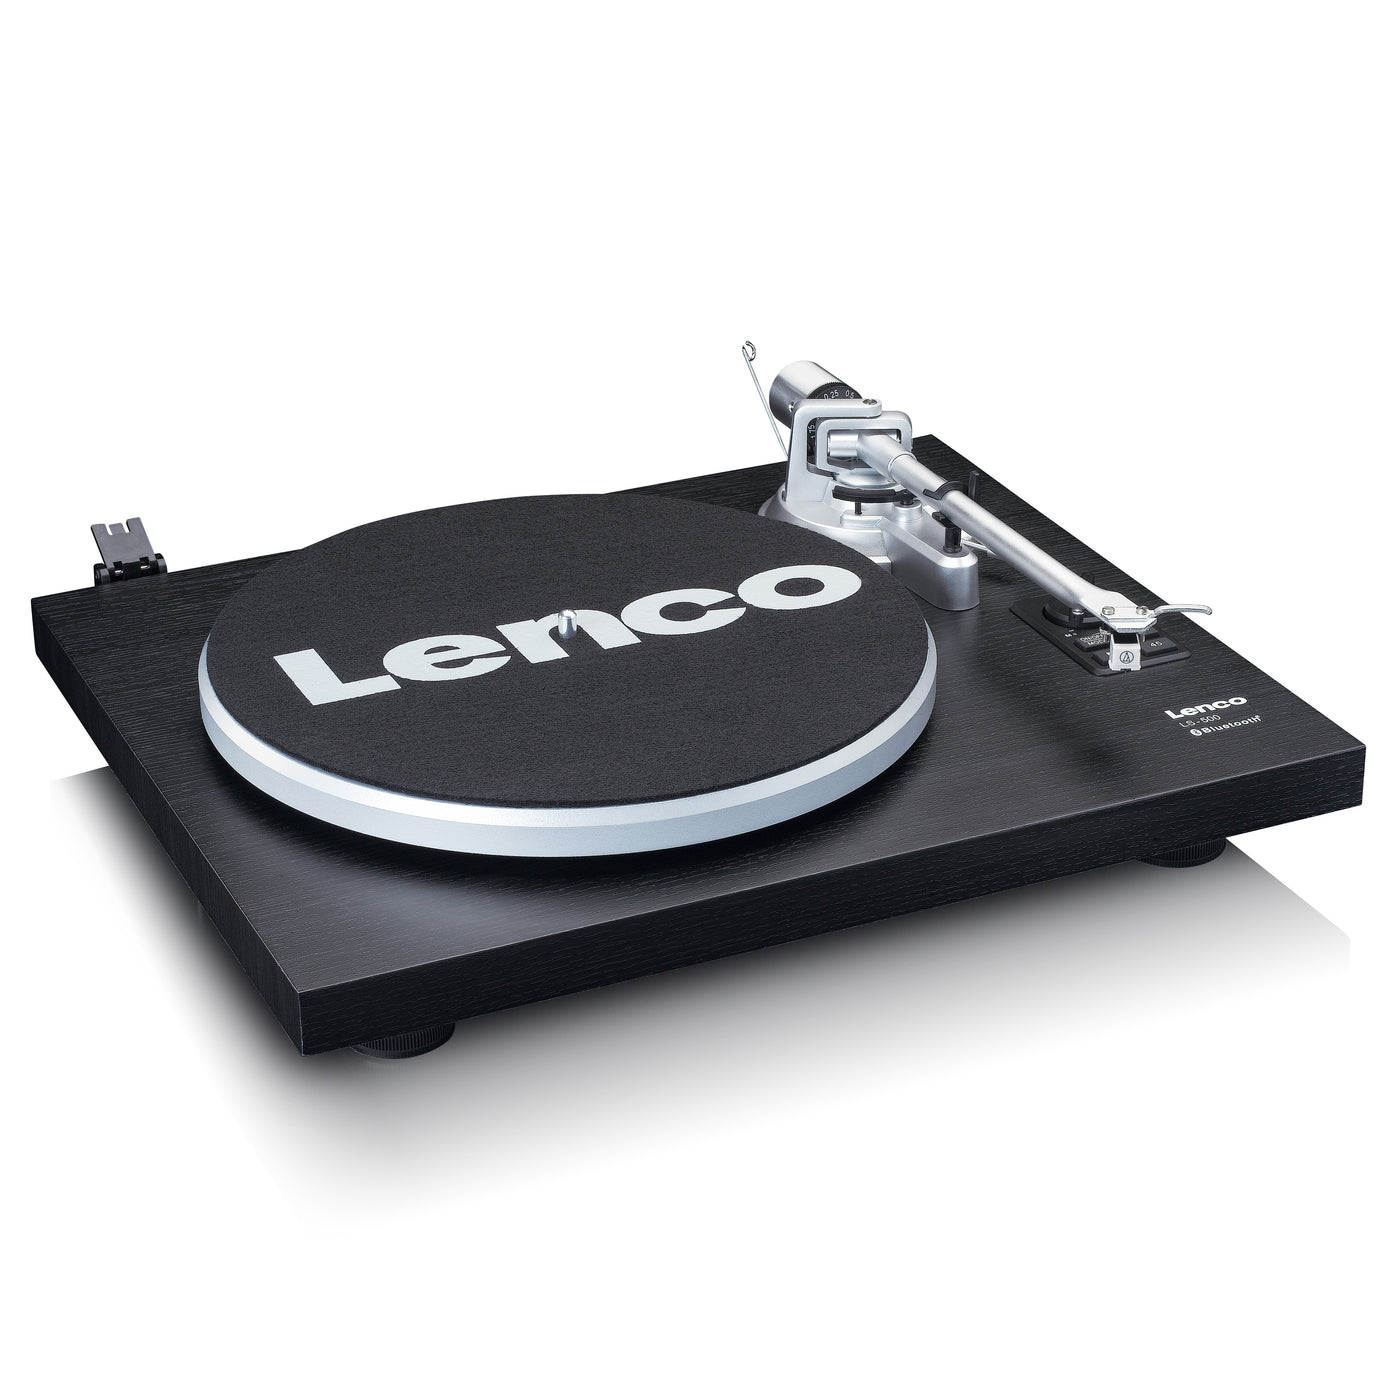 Lenco LS-500BK offiziellen Webshop Jetzt – Lenco - Webshop | im kaufen? Offizieller Lenco.de